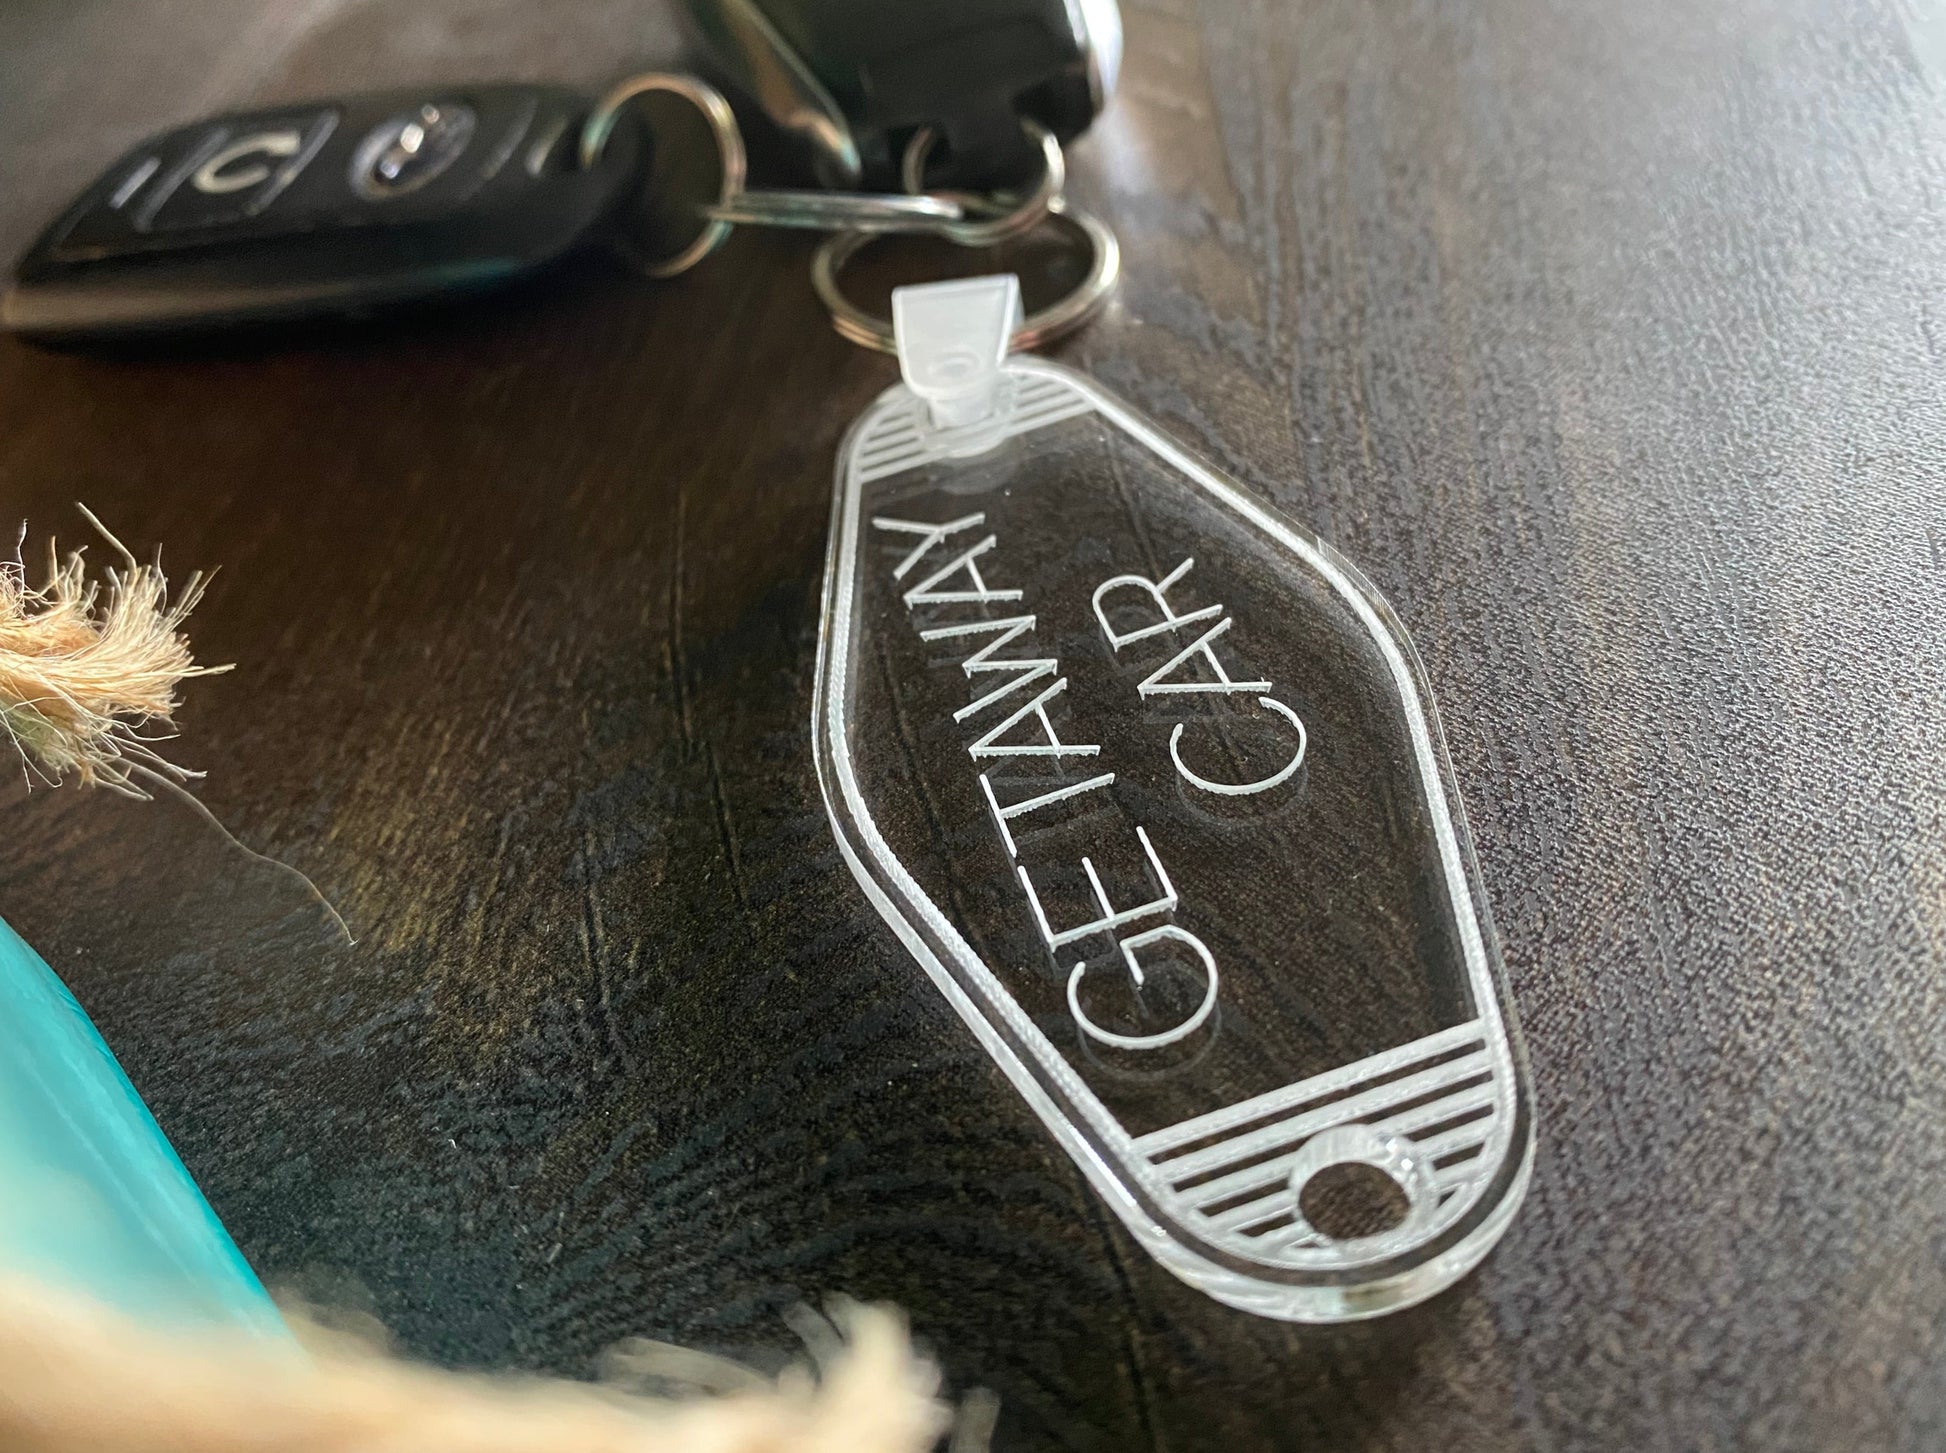 Getaway Car - acrylic motel style keychain - Novotny Designs